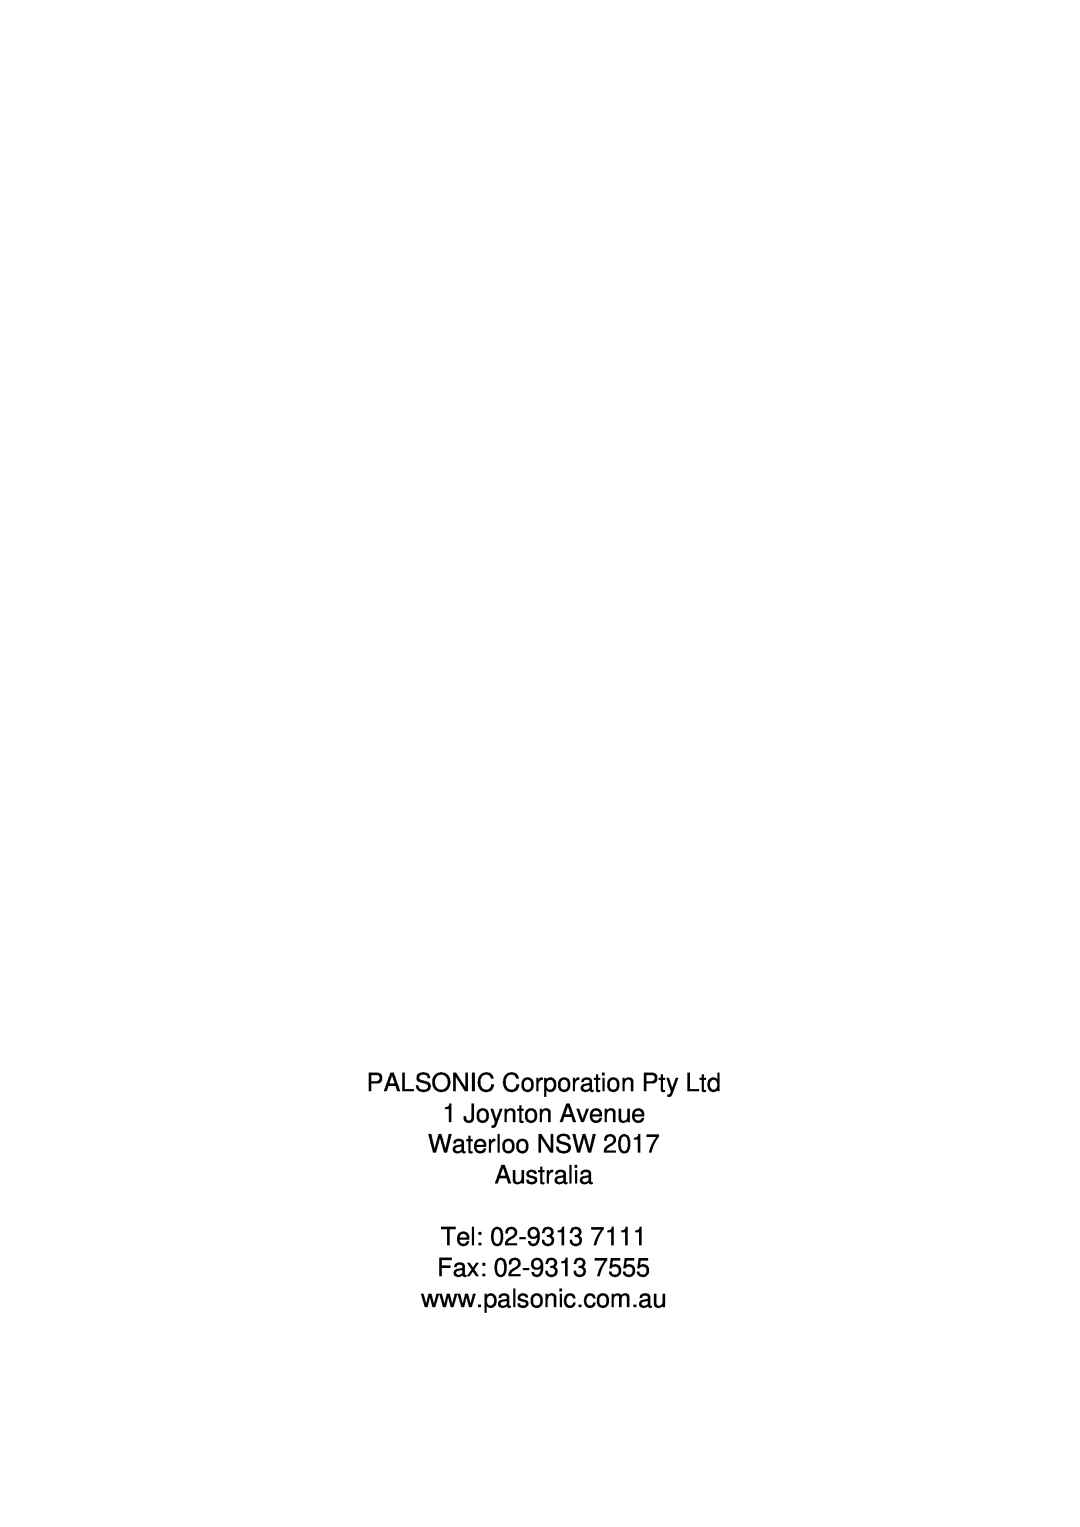 Palsonic PMO-555 owner manual Joynton Avenue Waterloo NSW Australia Tel 02-9313 Fax 